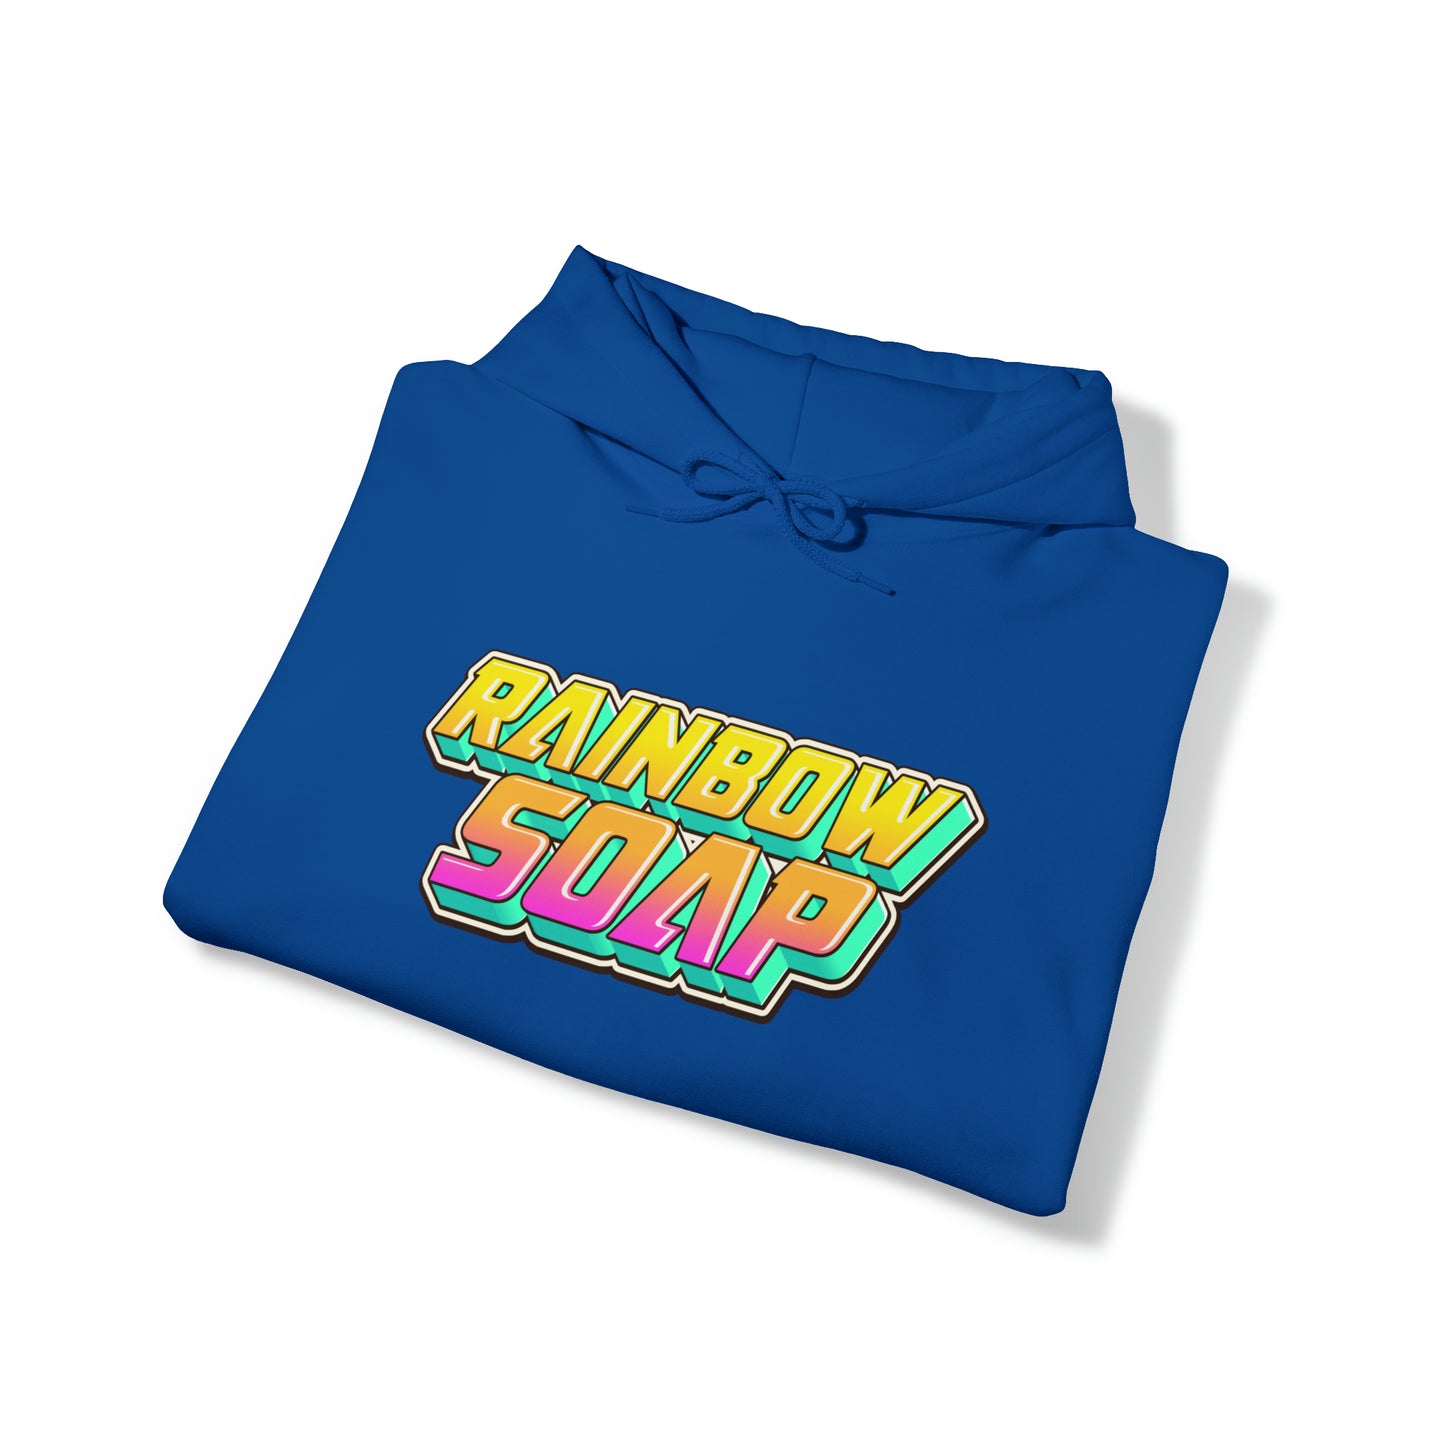 Rainbow Soap- Unisex Heavy Blend™ Hooded Sweatshirt